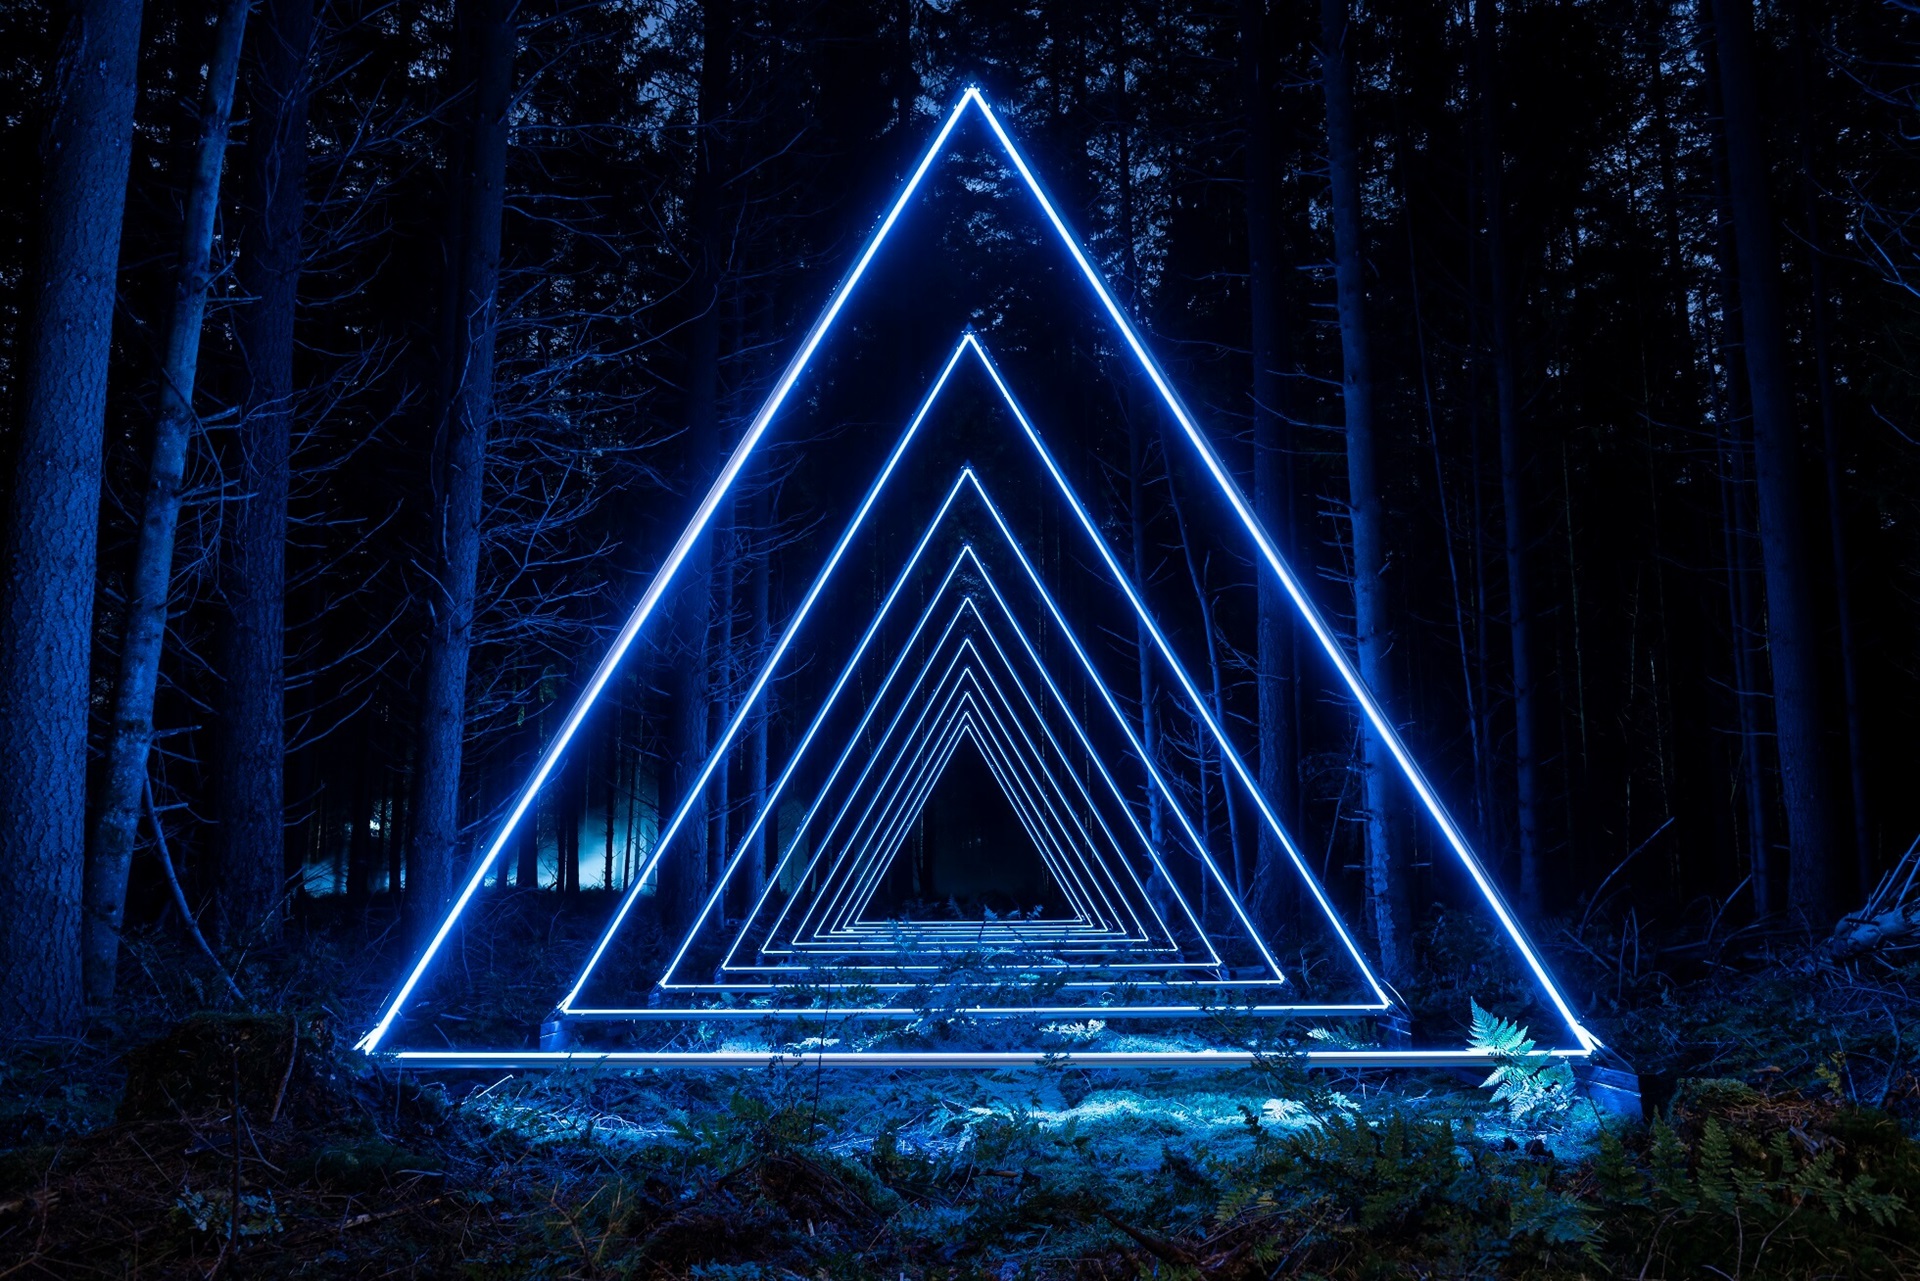 Luci blu, triangolari e luminose in una foresta oscura